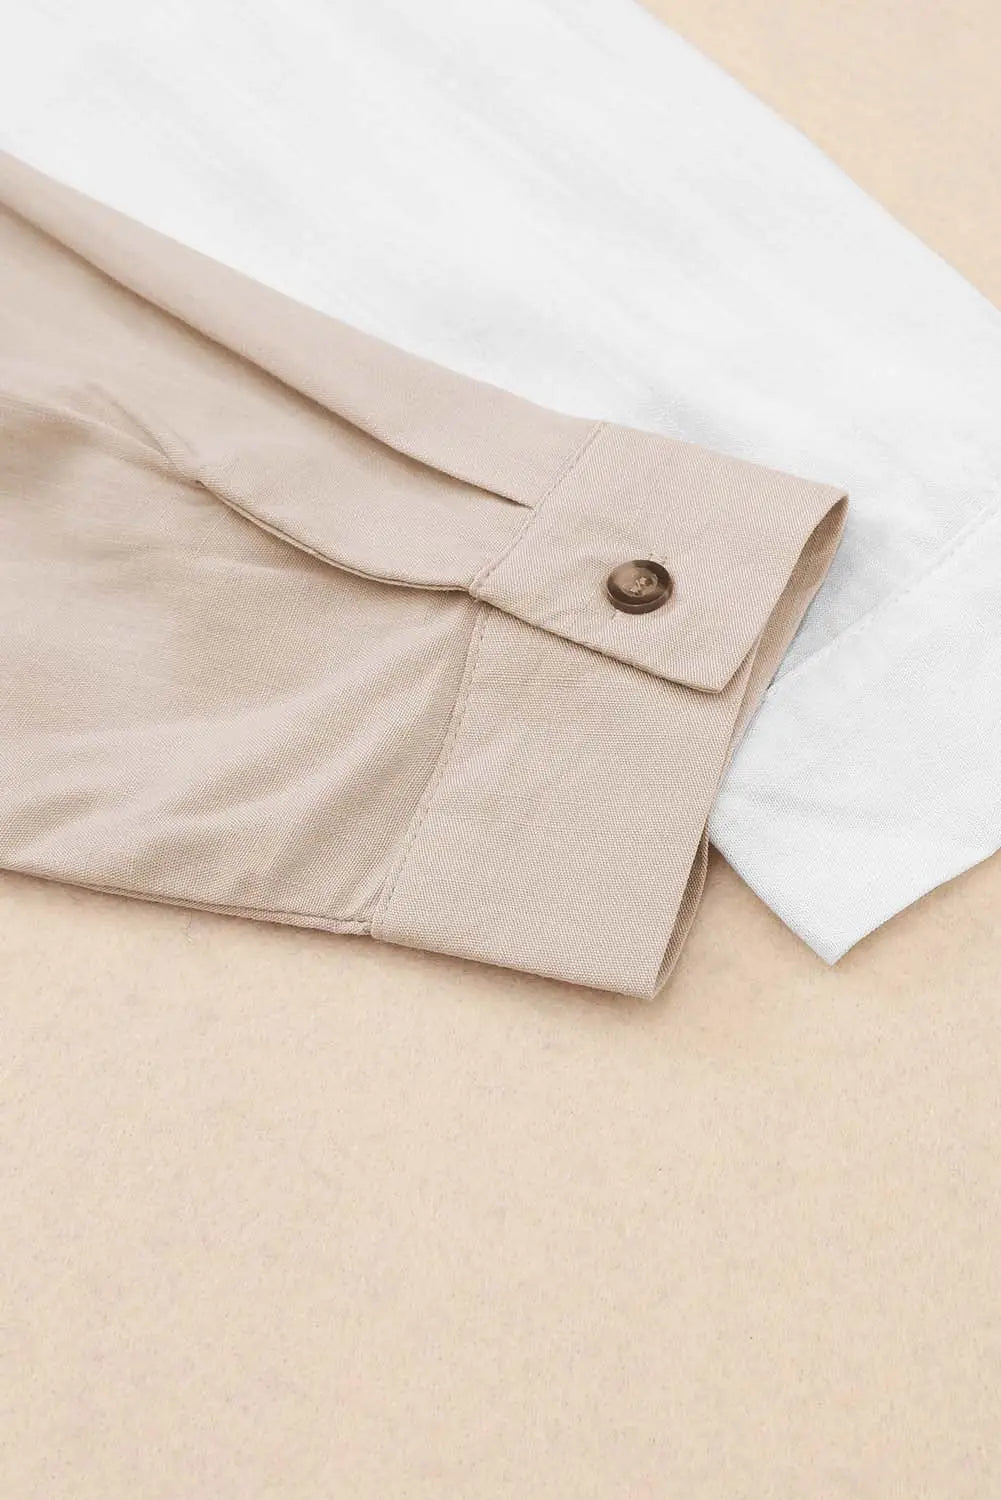 Khaki Colorblock Buttons Shirt-Collar Long Sleeve Pocket Blouse-9